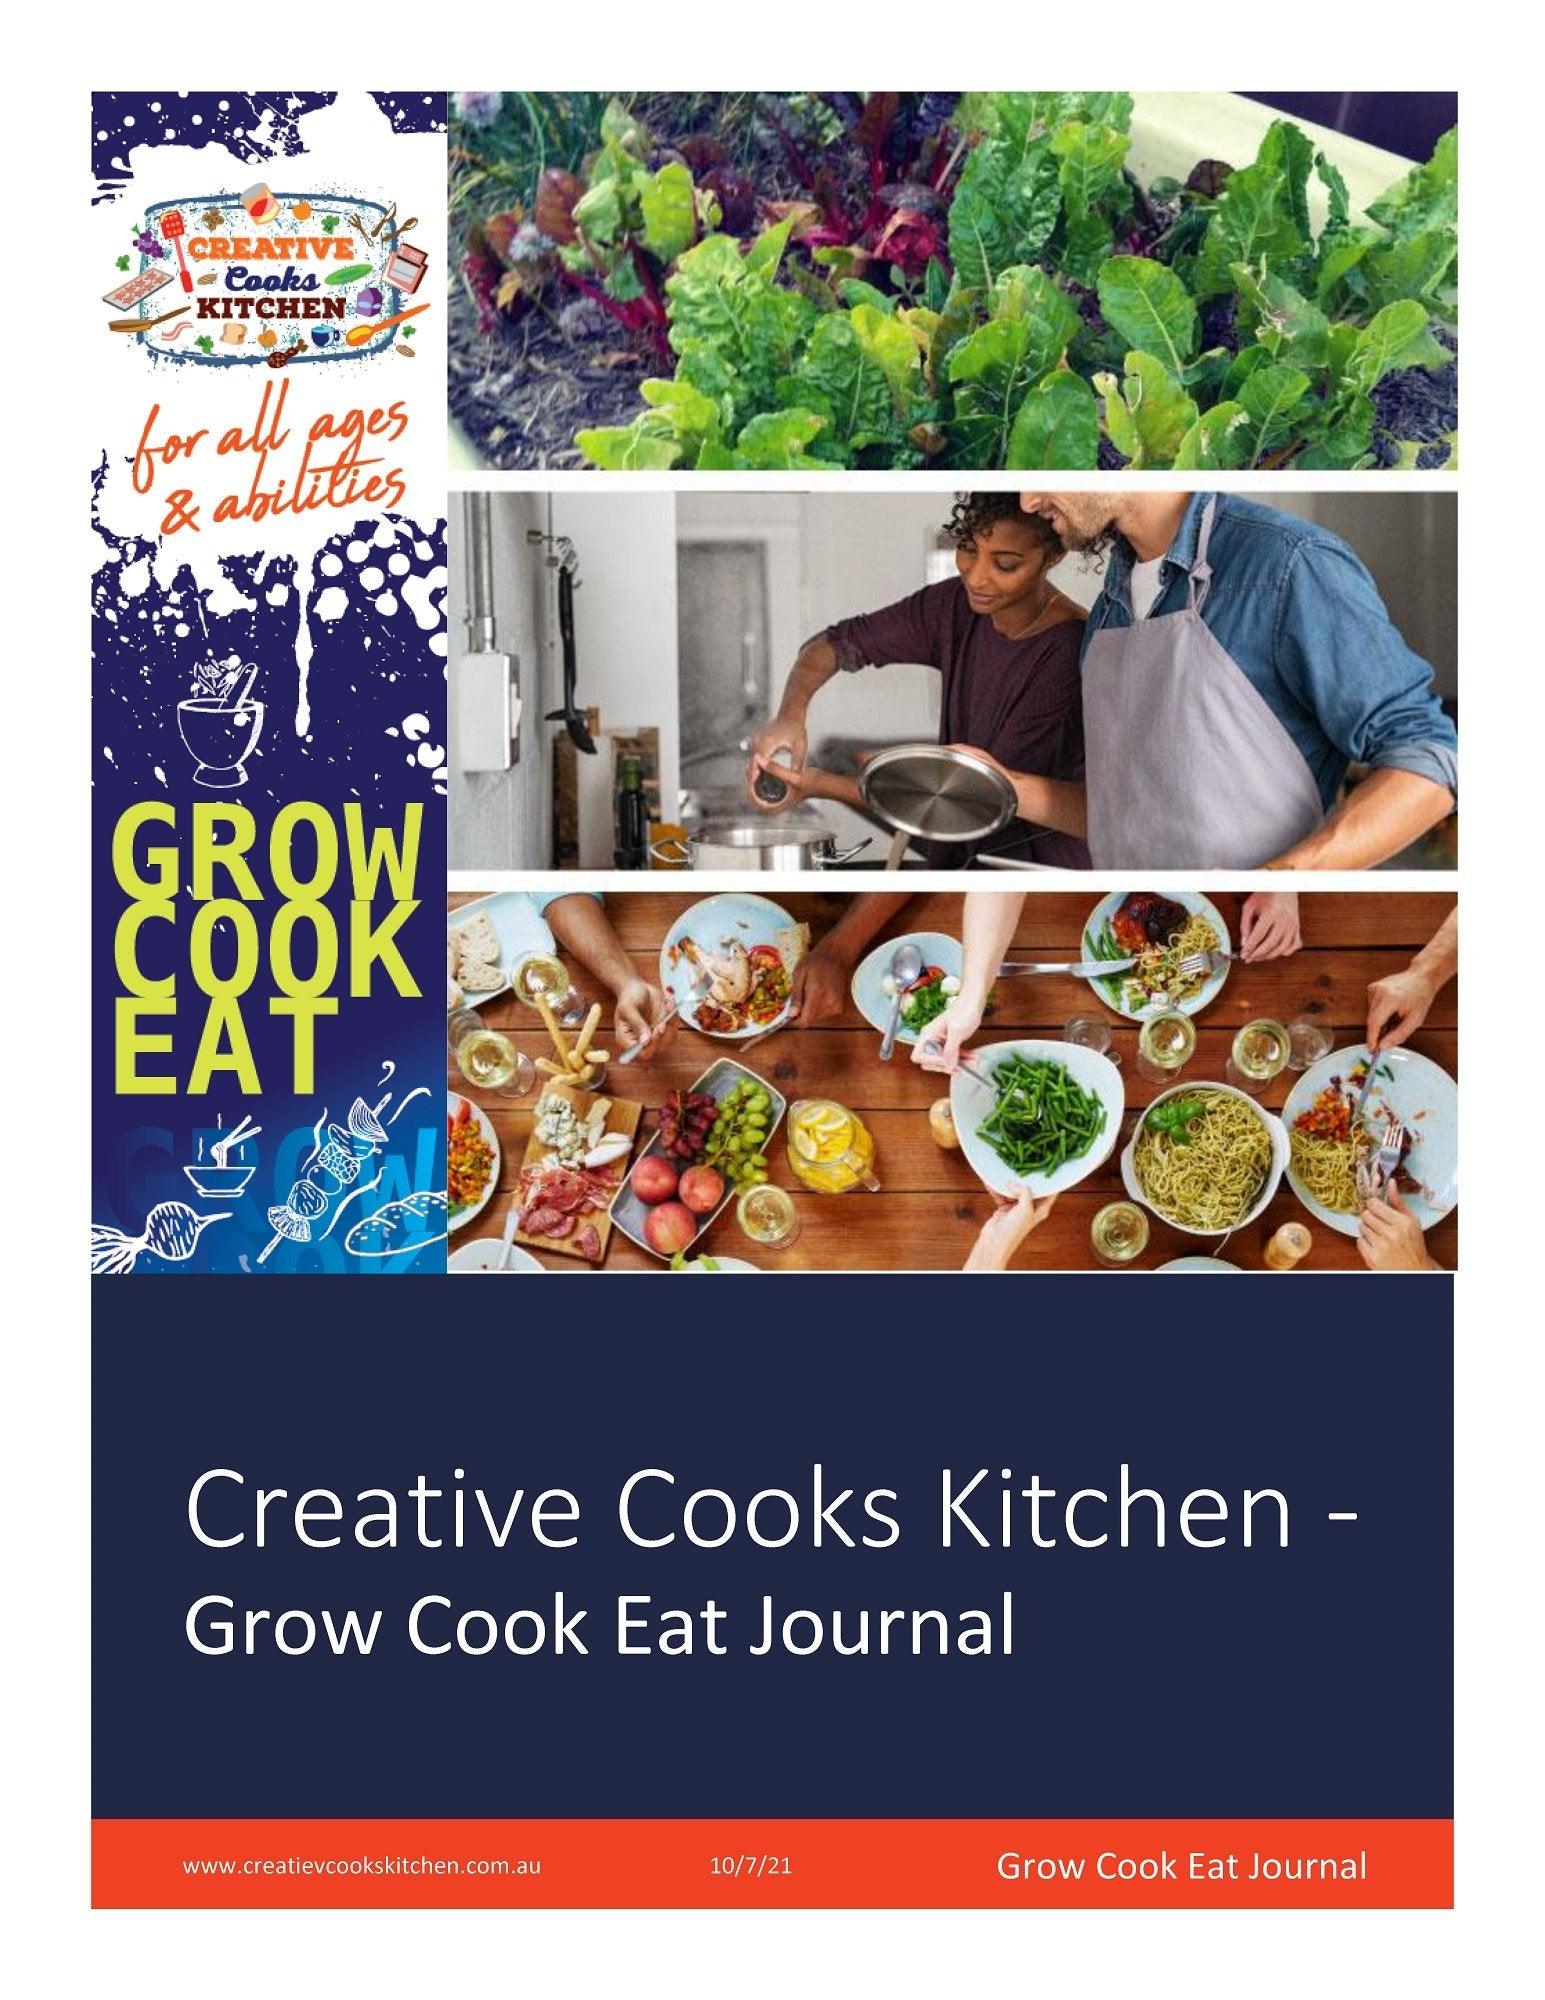 Grow Cook Eat Journal - Hard Copy - Creative Cooks Kitchen Australia